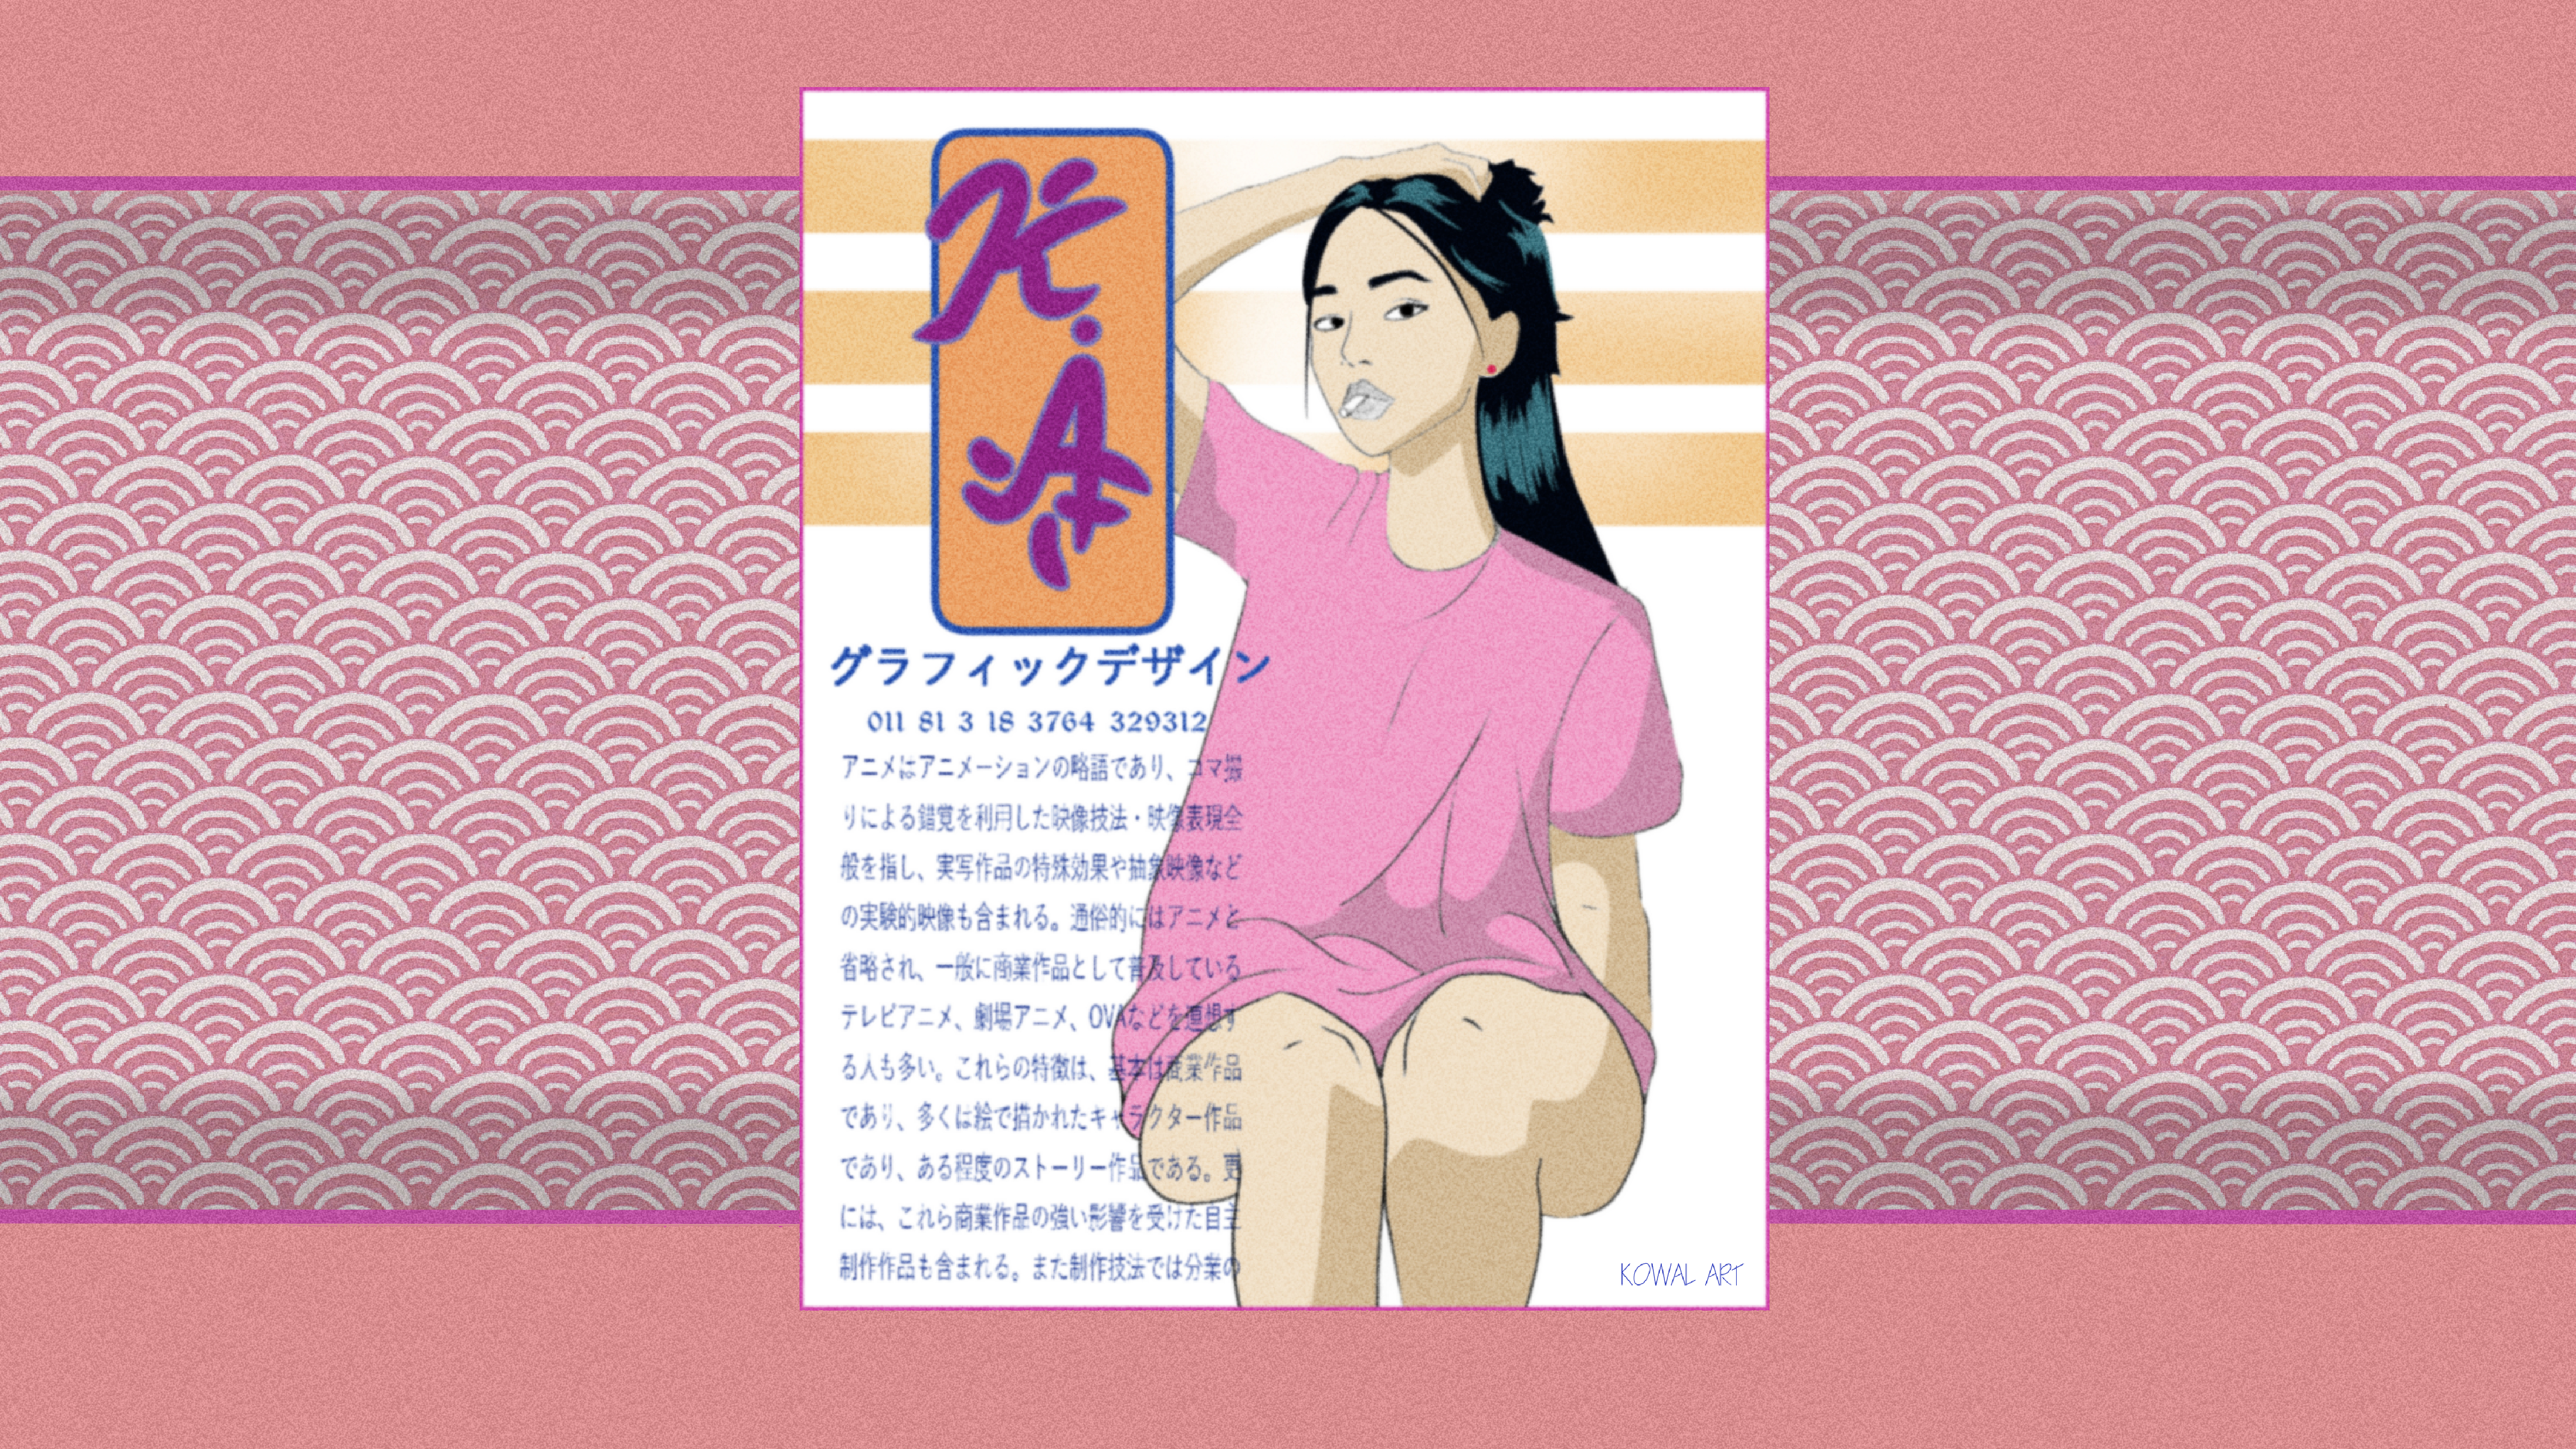 Anime Anime Girls Manga Manga Illustration Japan Japanese Japanese Art 1980s 5120x2880